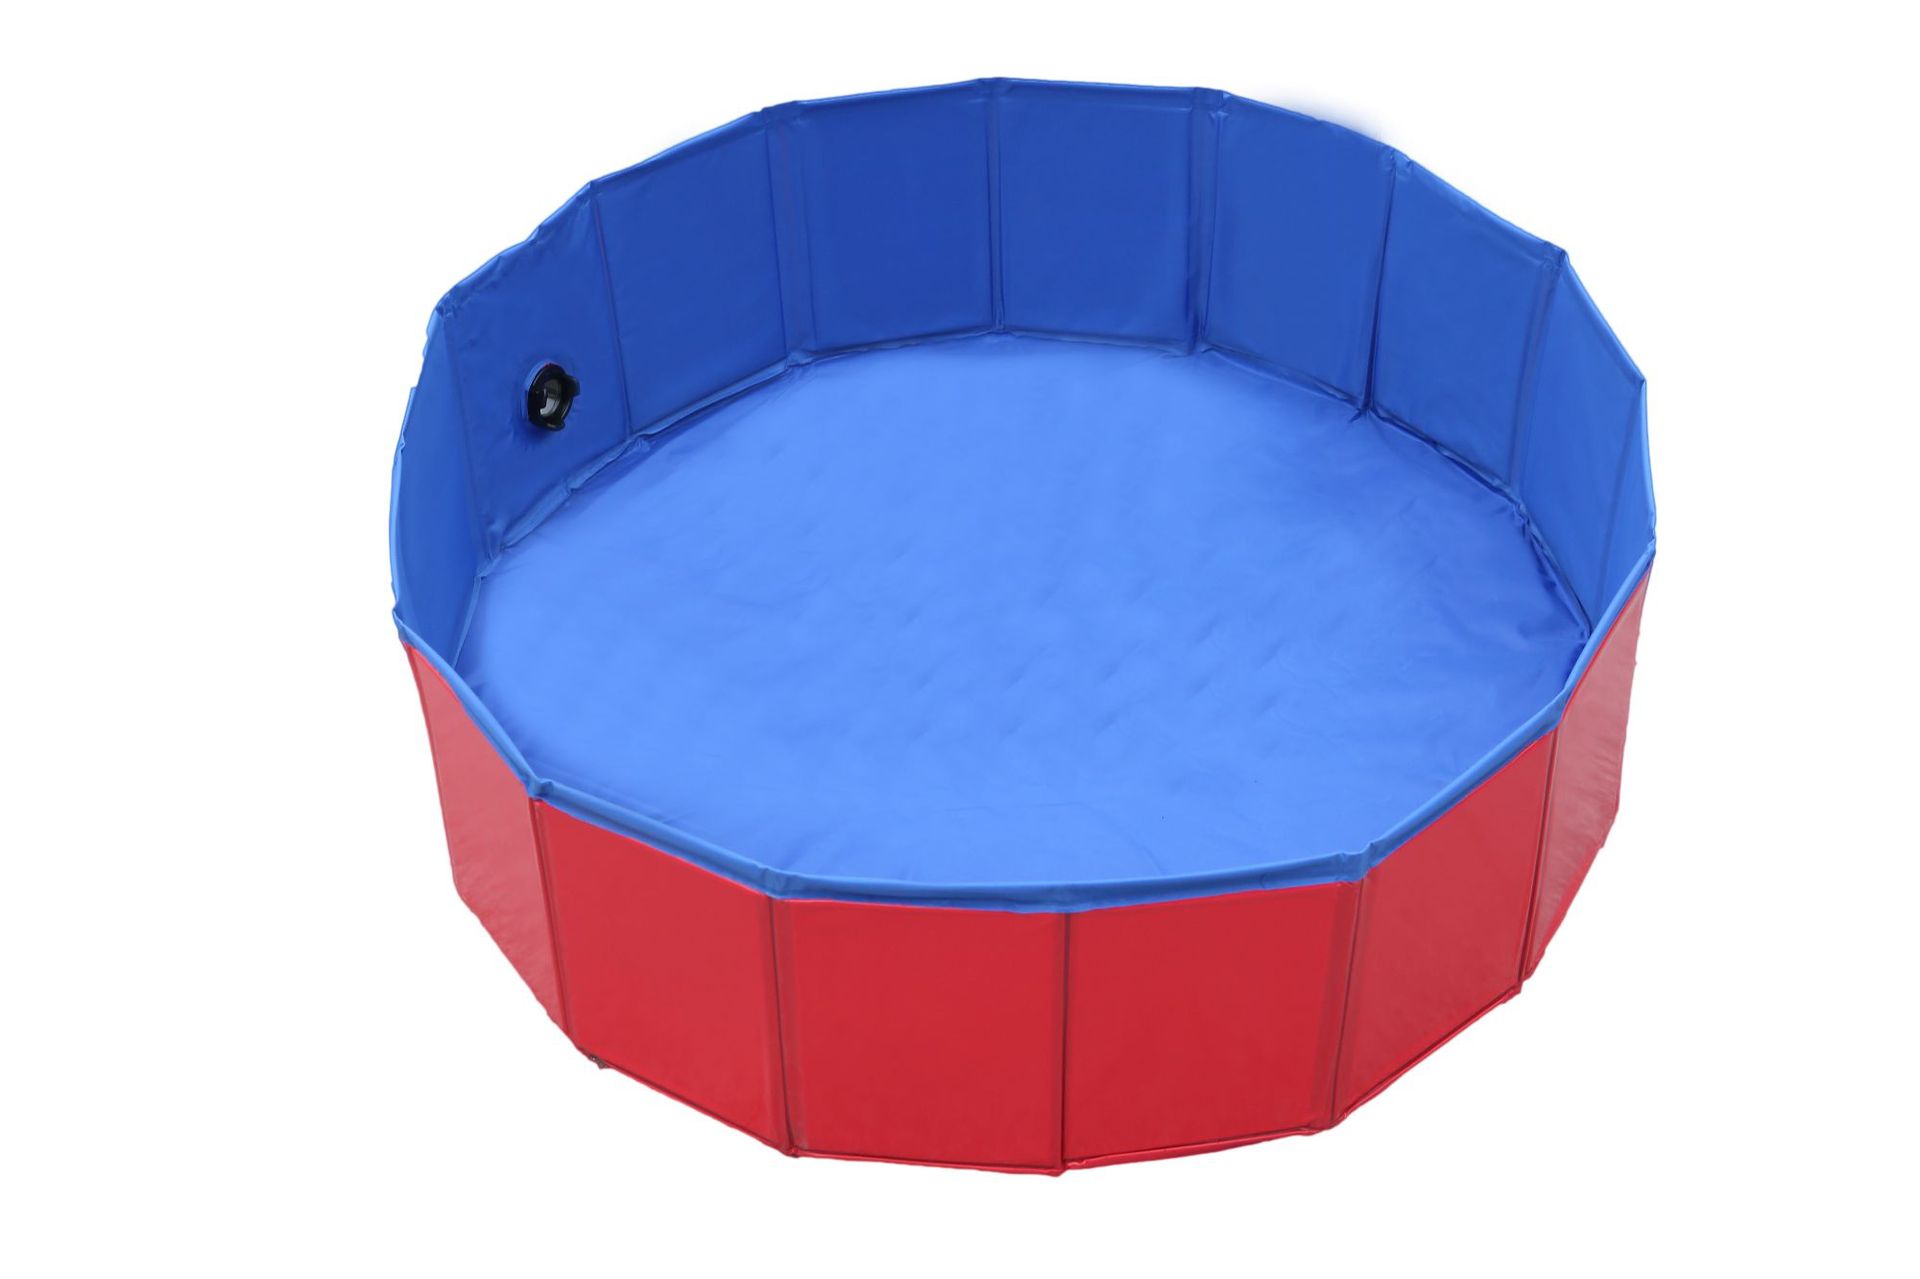 Large Hard Plastic Foldable Collapsible Paddling Dog Pet Pool